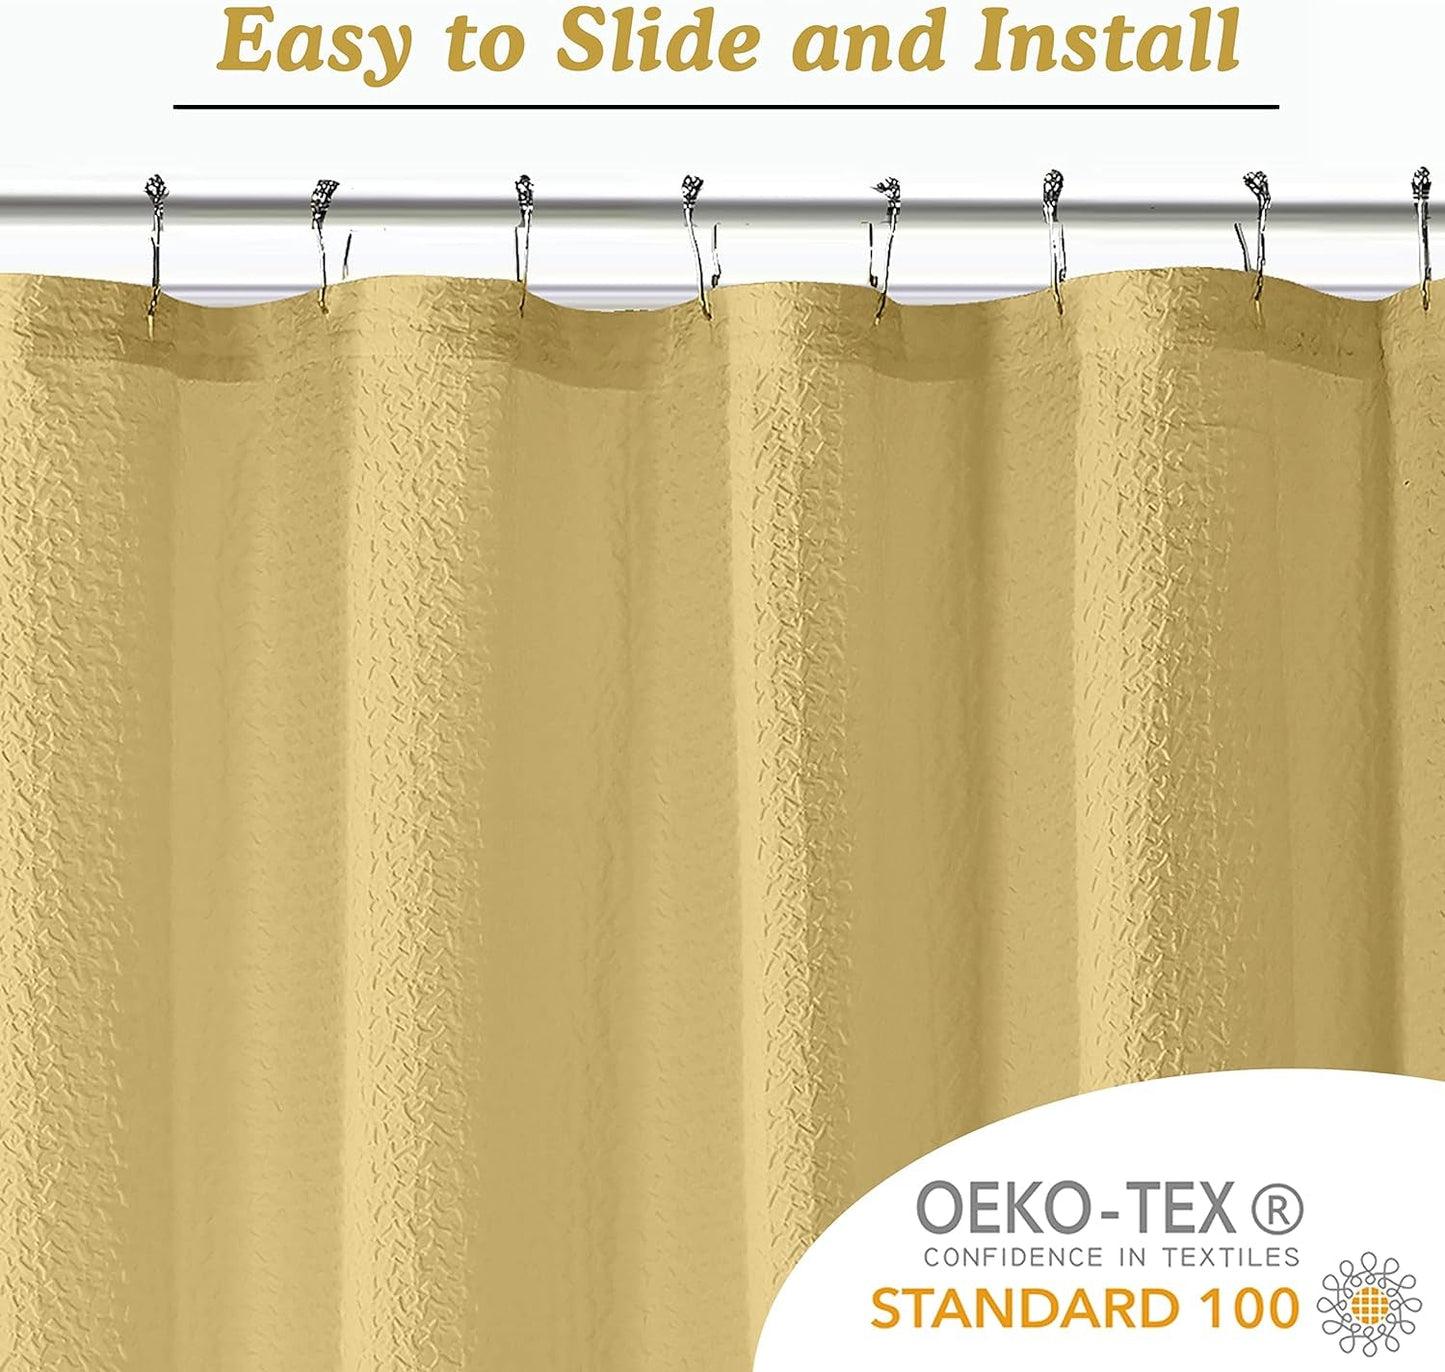 OVZME Yellow Shower Curtain for Bathroom, 3D Embossed Textured Kid'S Shower Curtain, Fabric Washable Heavy Duty Soft Bath Curtain, Modern Bathroom Decor Soft Cloth Shower Curtain, 72" W X 72" L